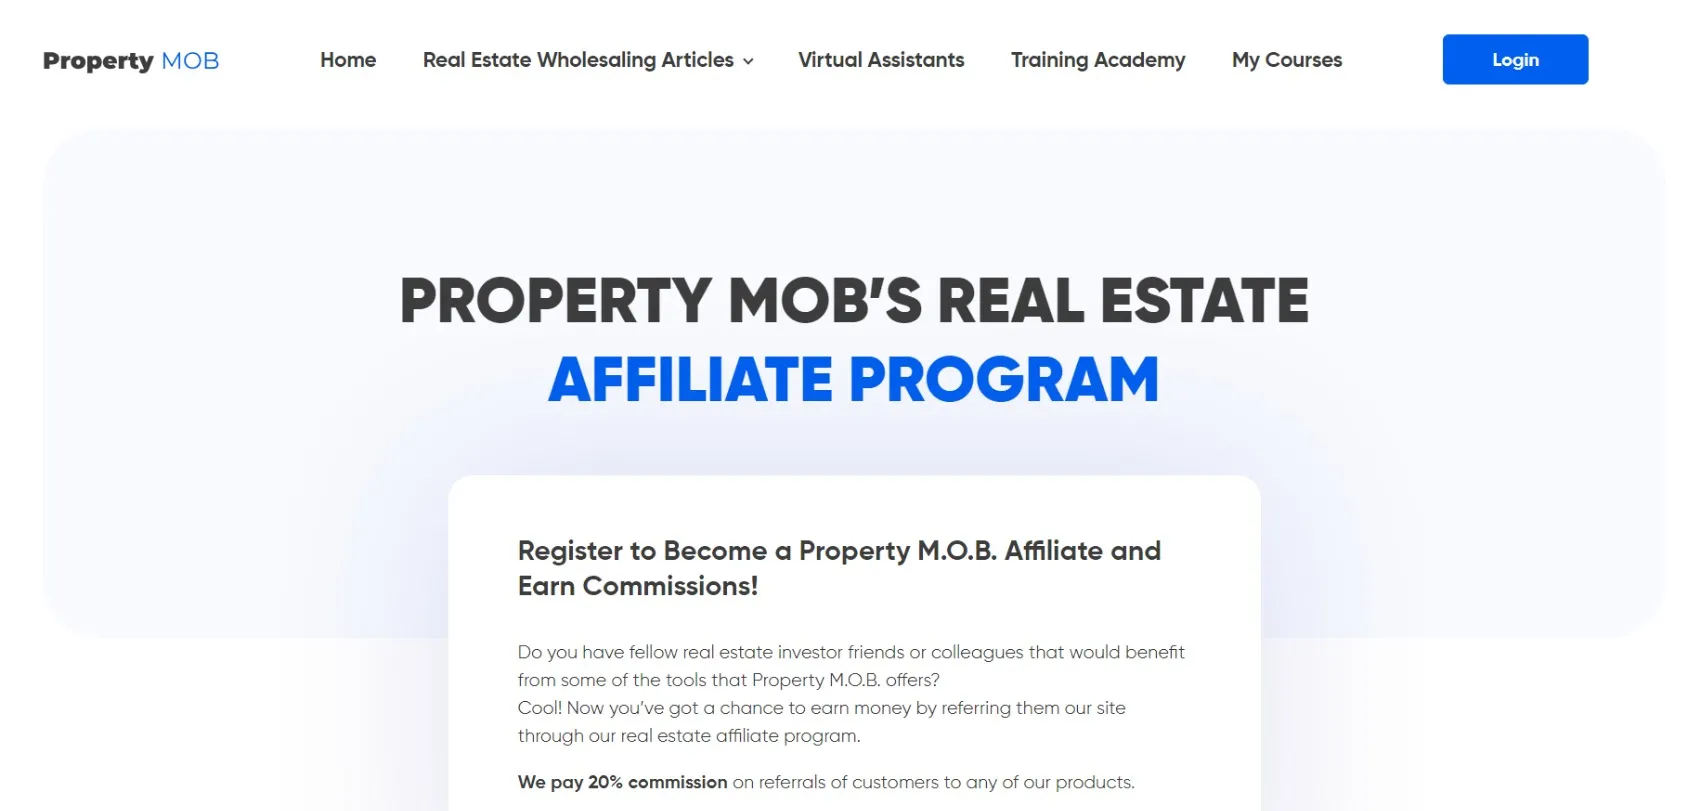 Property MOB